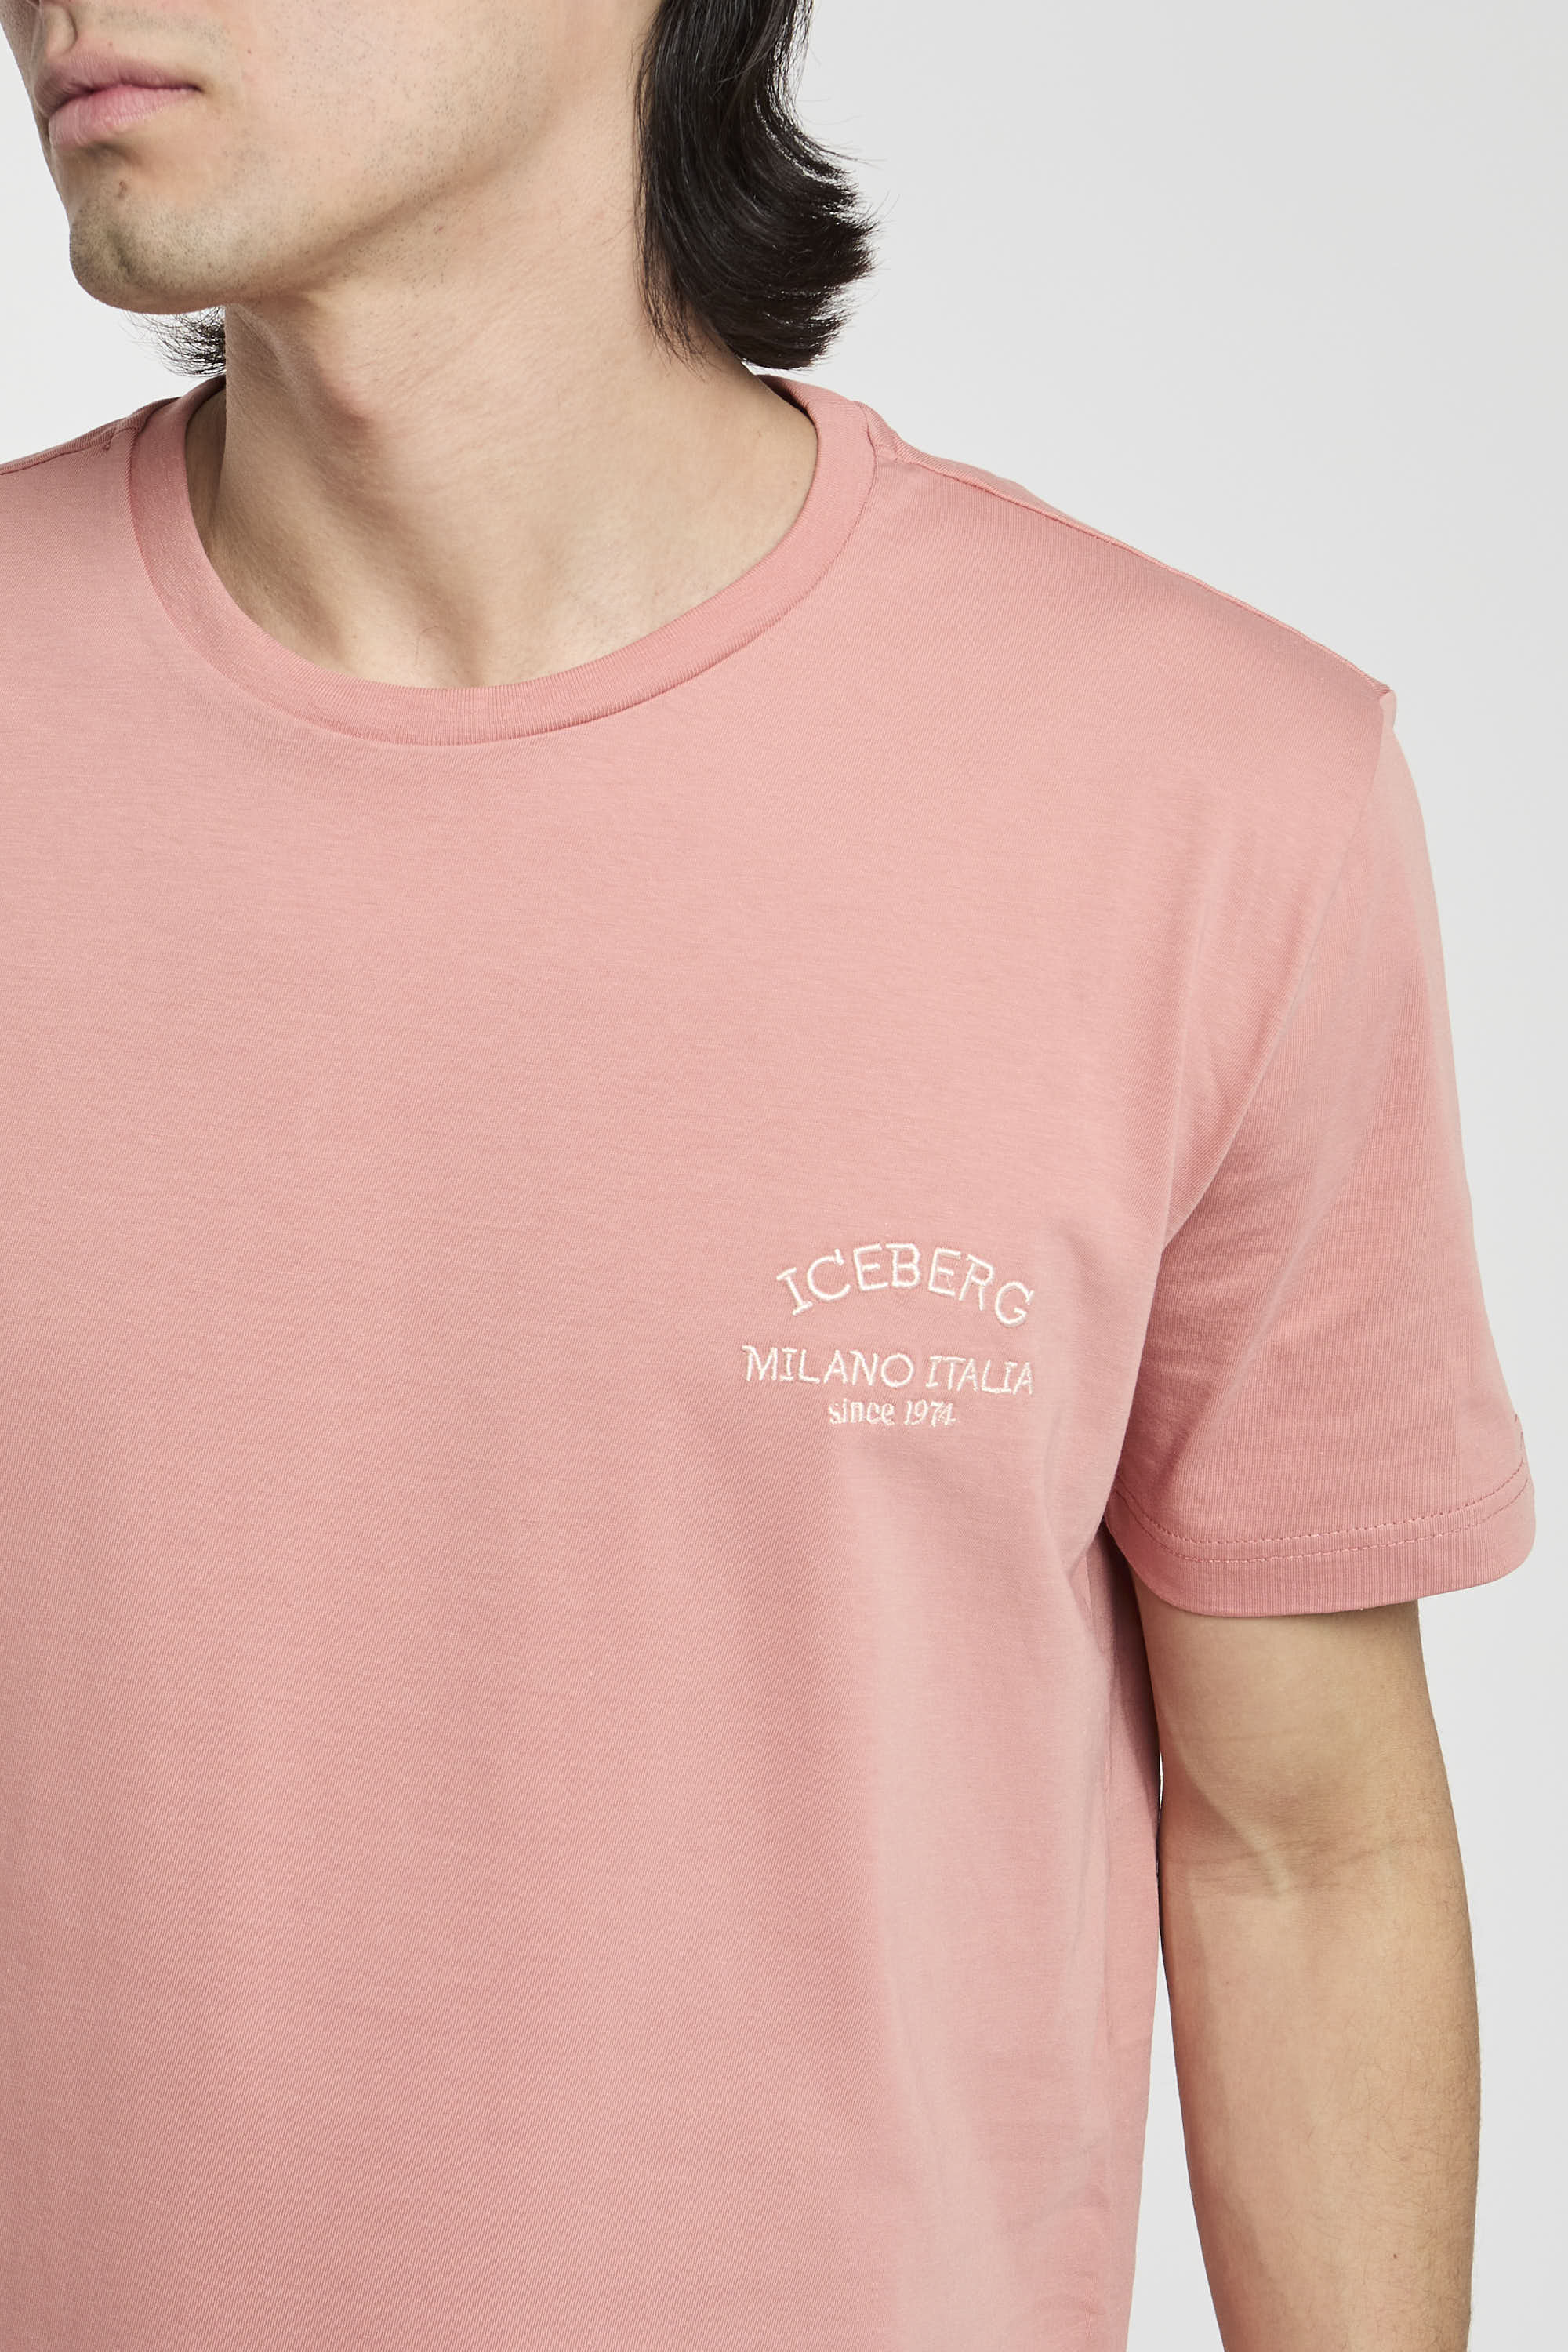 Iceberg Cotton Pink T-shirt-1